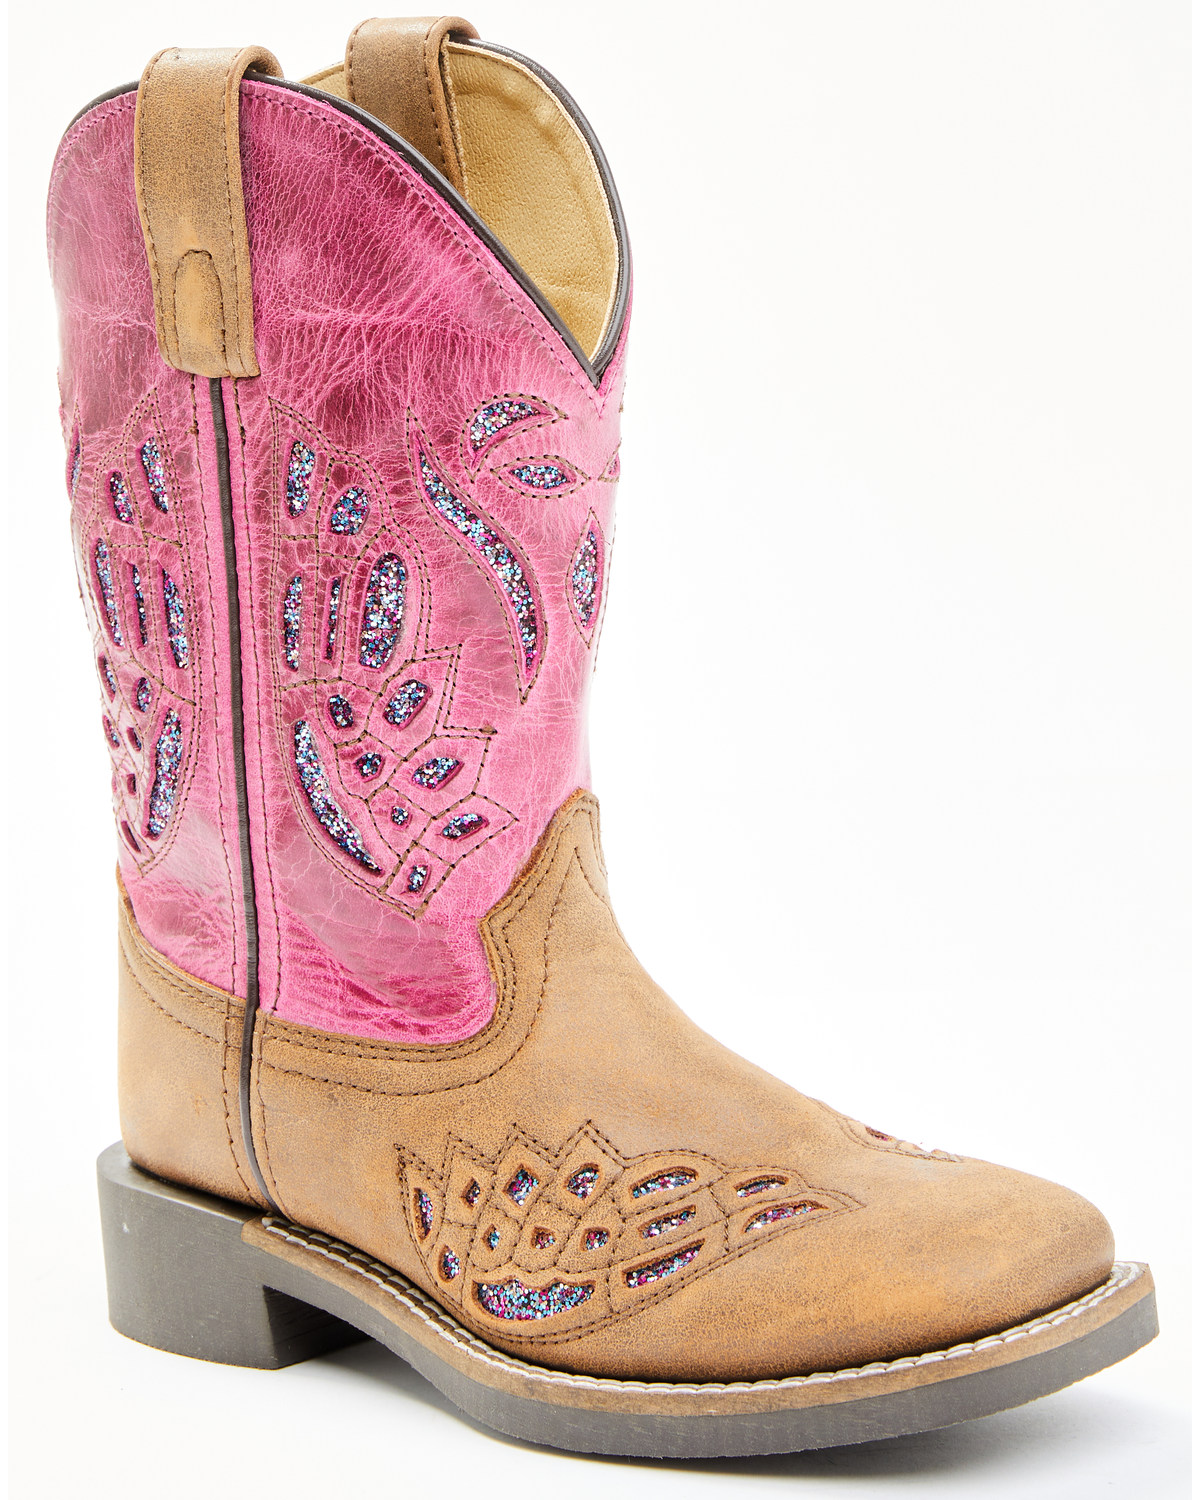 Shyanne Girls' Chloe Glitter Western Boots - Square Toe